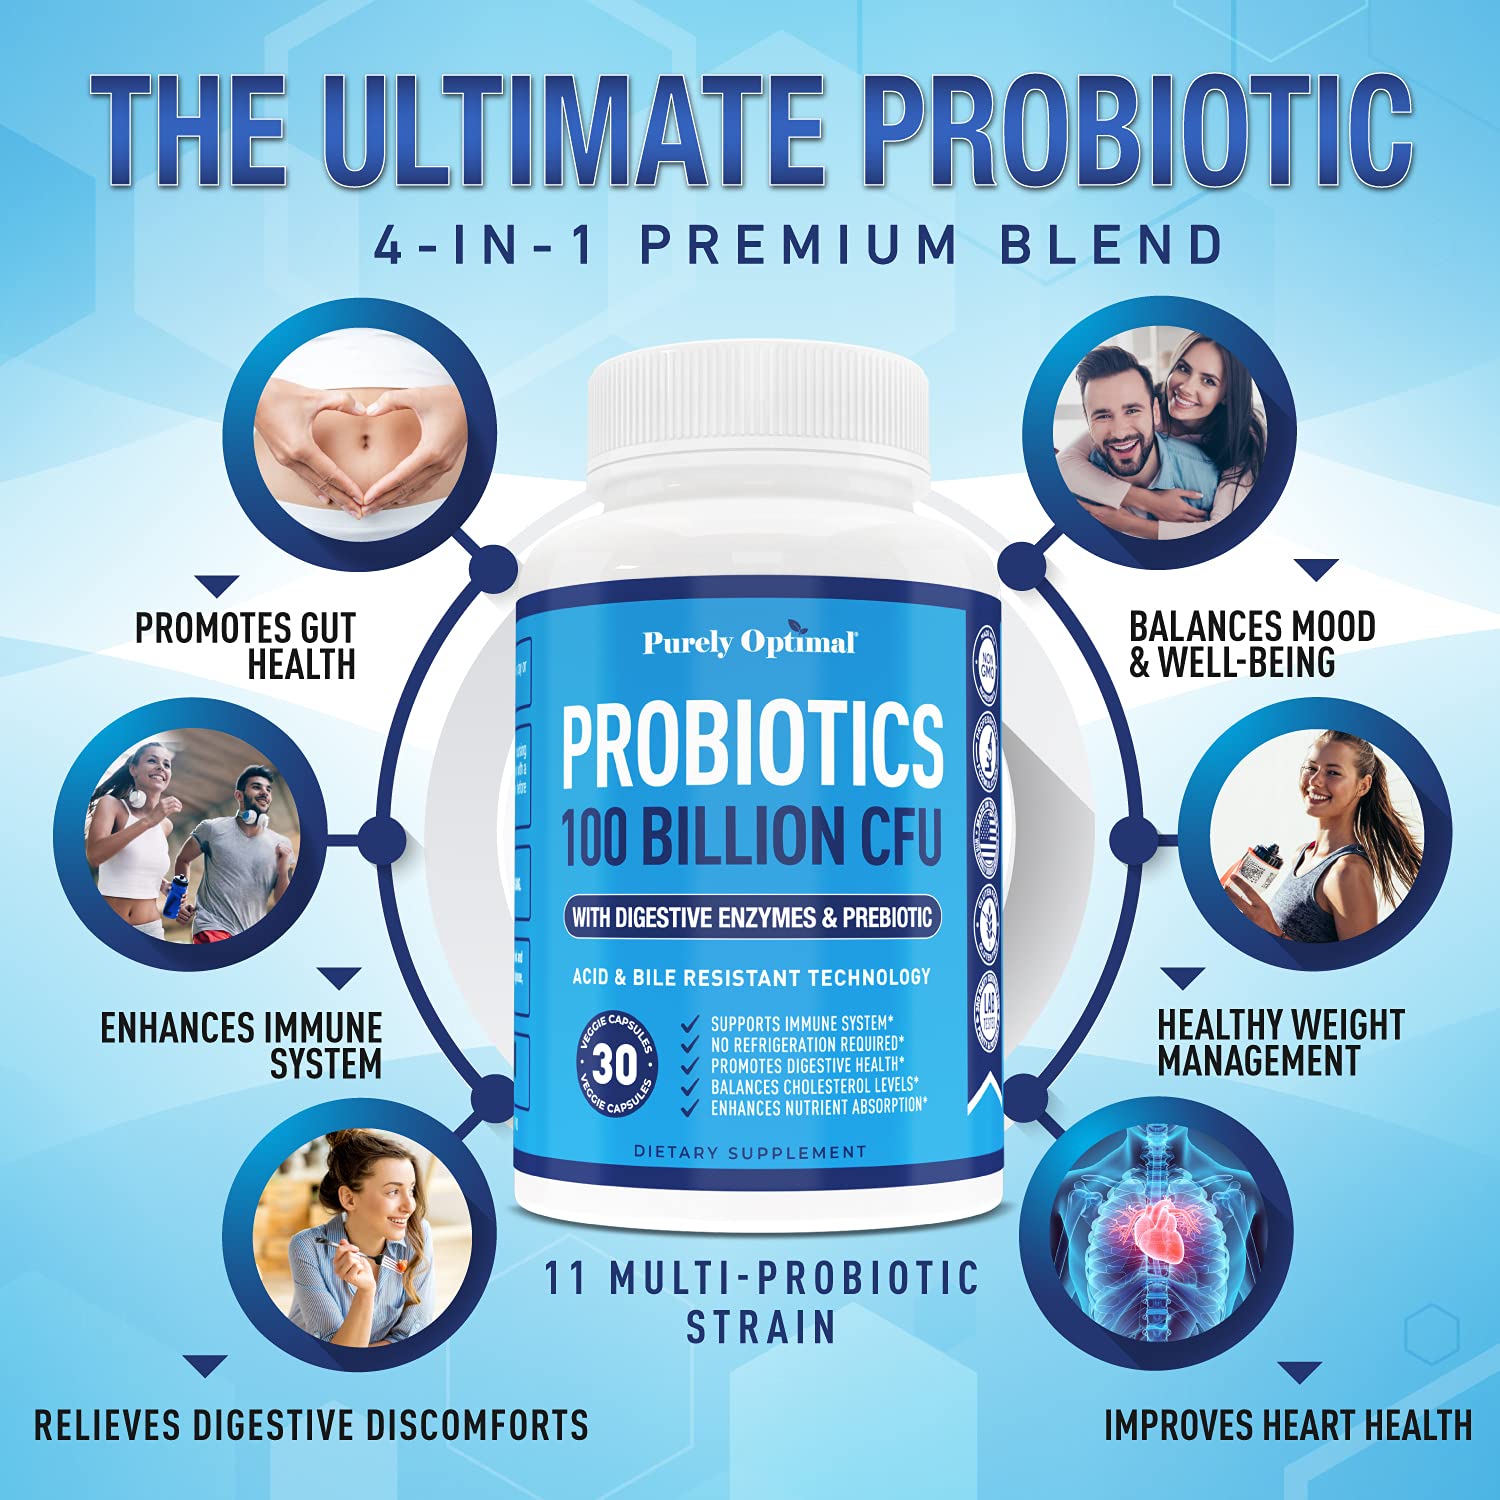 Purely Optimal Premium Probiotics 100 Billion CFU w/Digestive Enzymes - Organic Prebiotics & Immune Support, Dr. Formulated Probiotics for Men & Women for Gut Health - 30 Capsules